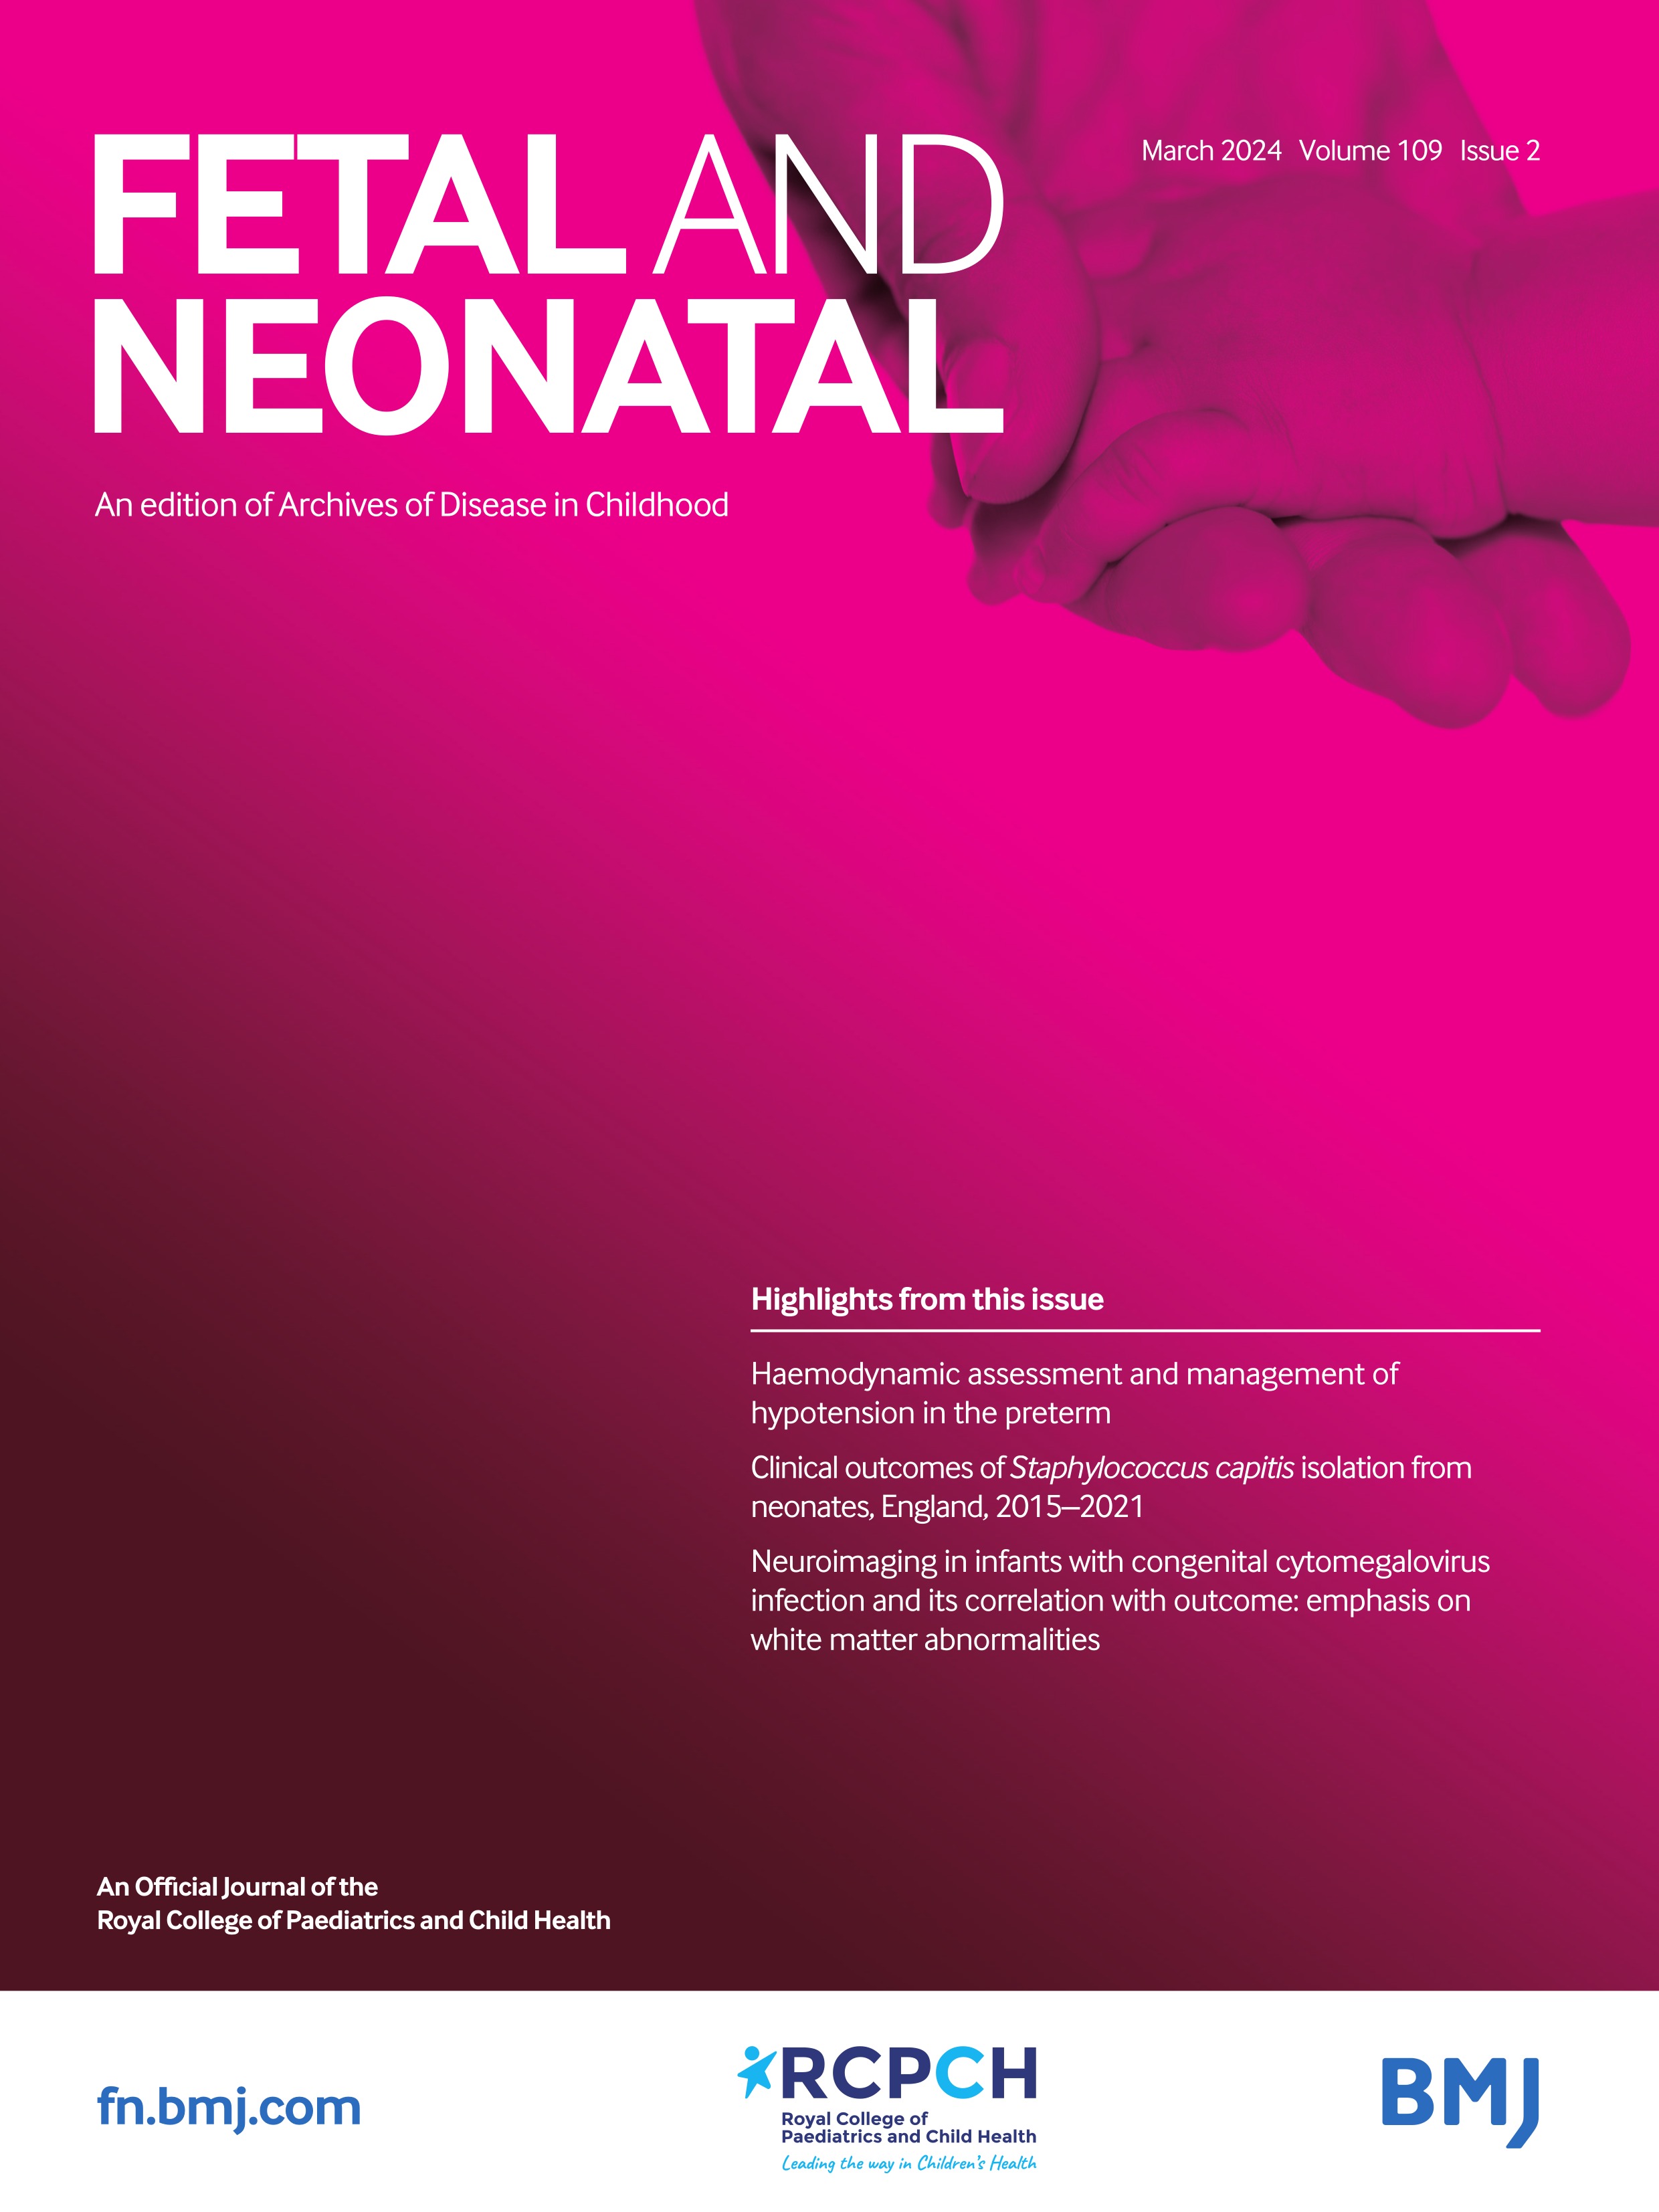 Impact of adopting a neonatal sepsis risk calculator in a diverse population in Birmingham, UK